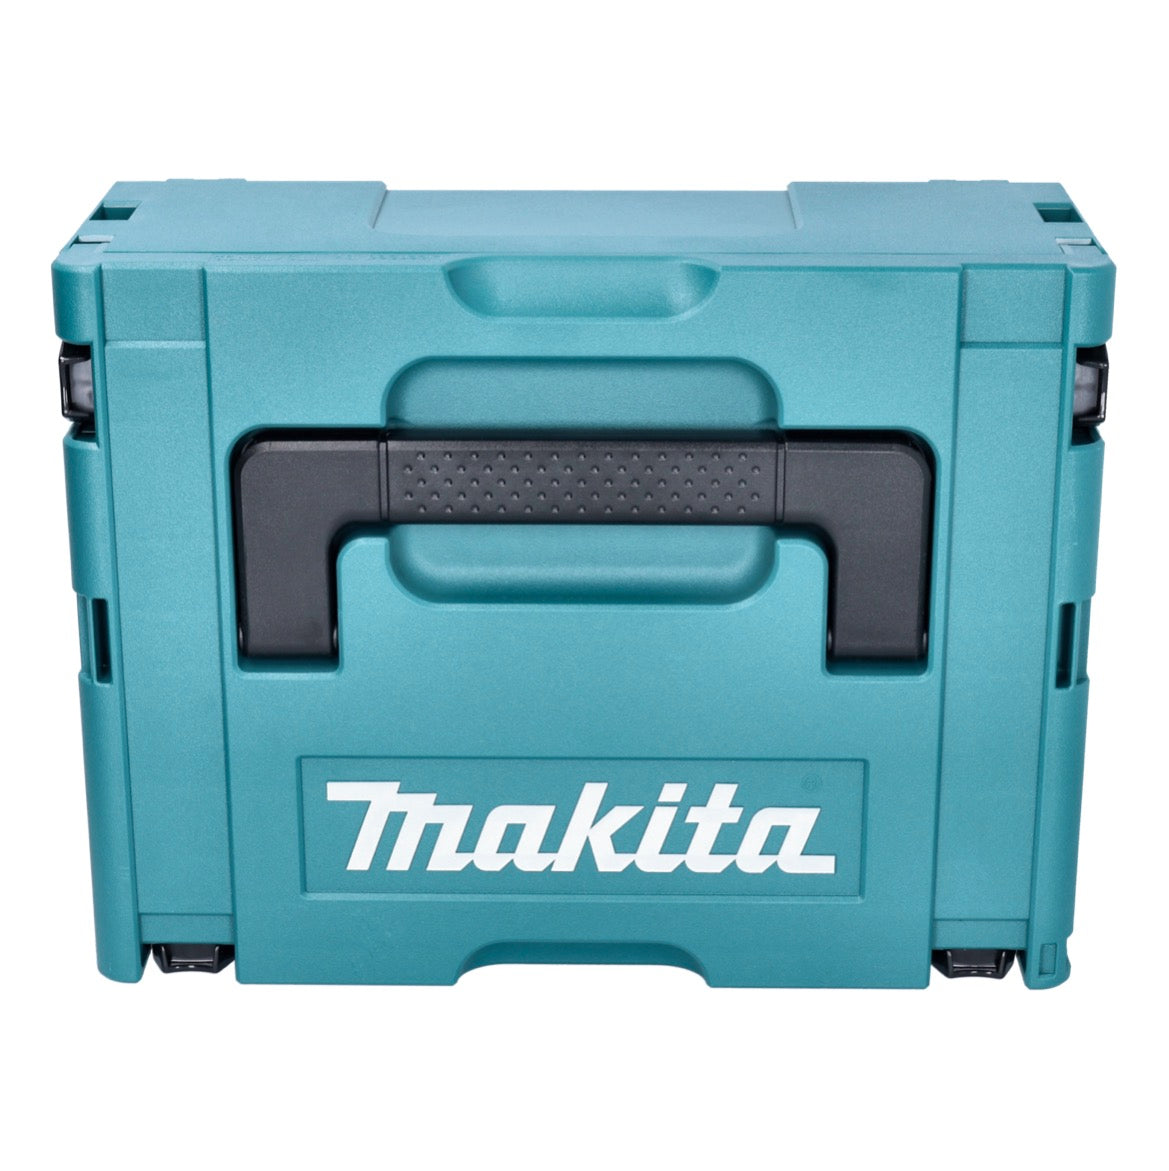 Makita DHP 489 F1J Akku Schlagbohrschrauber 18 V 73 Nm Brushless + 1x Akku 3,0 Ah + Makpac - ohne Ladegerät